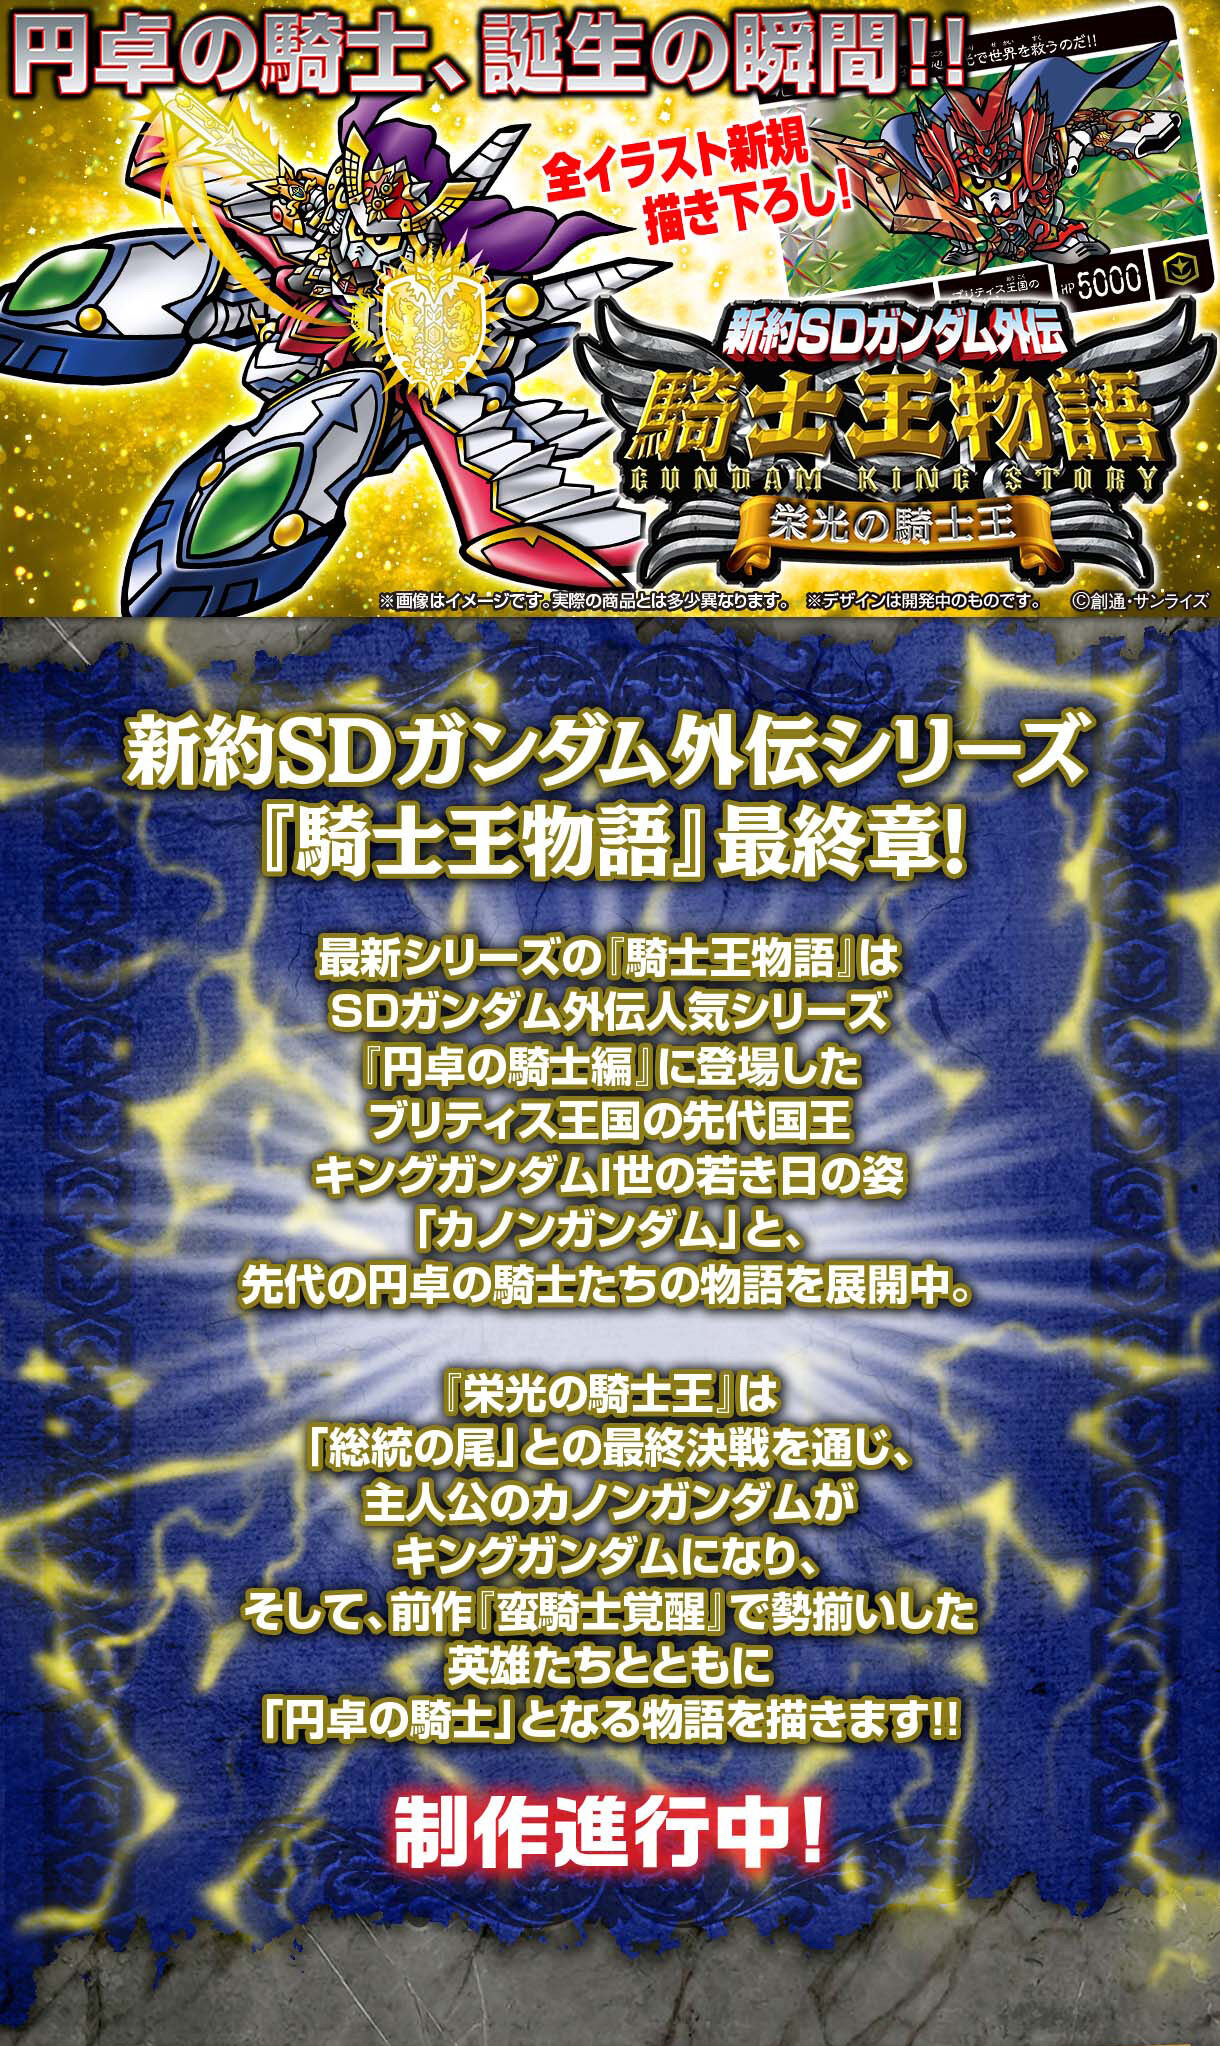 New Testament SD Gundam Gaiden Gundam King Story Eiko No Kishio